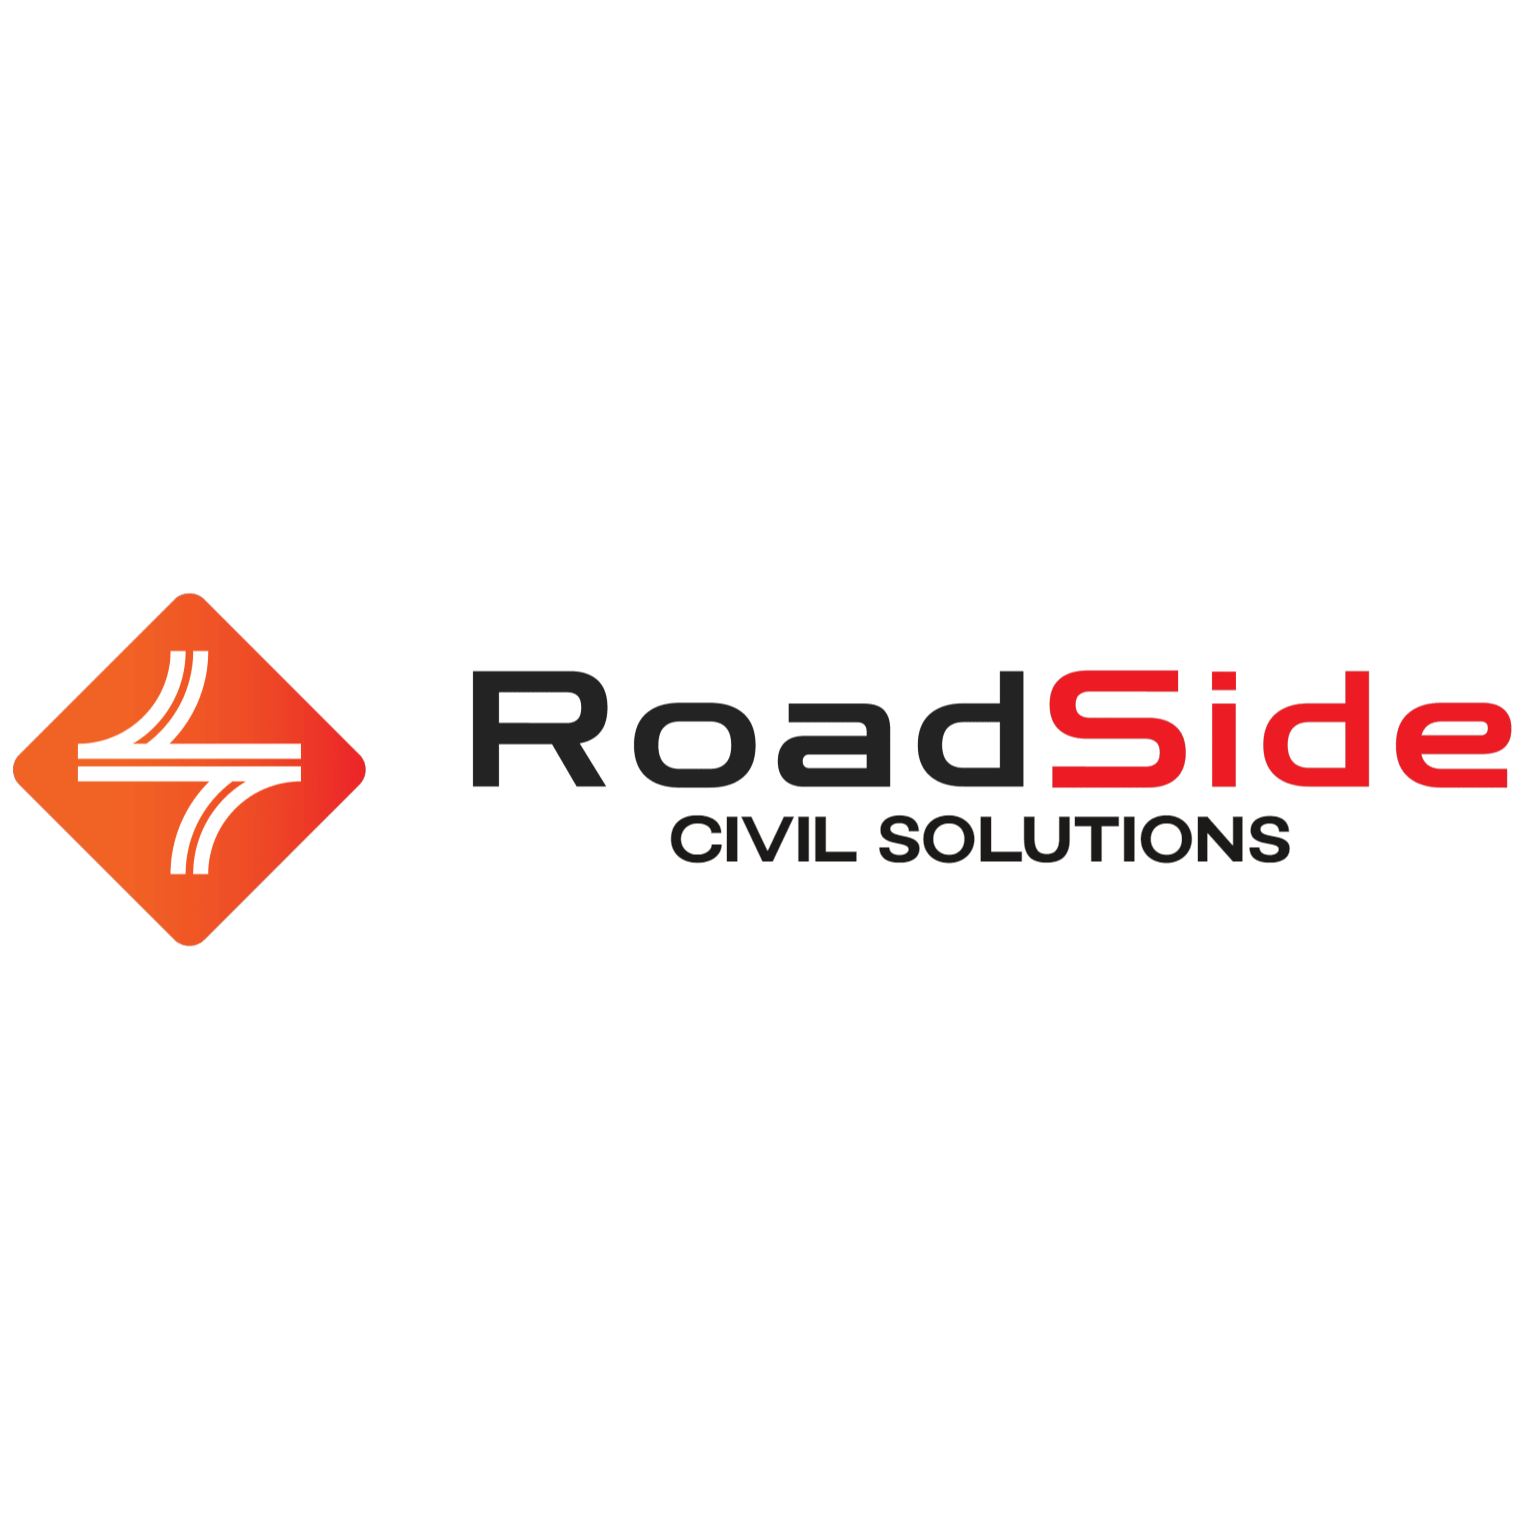 Roadside Civil Solutions - Your Trusted Bulldozer Rental Partner in Brisbane